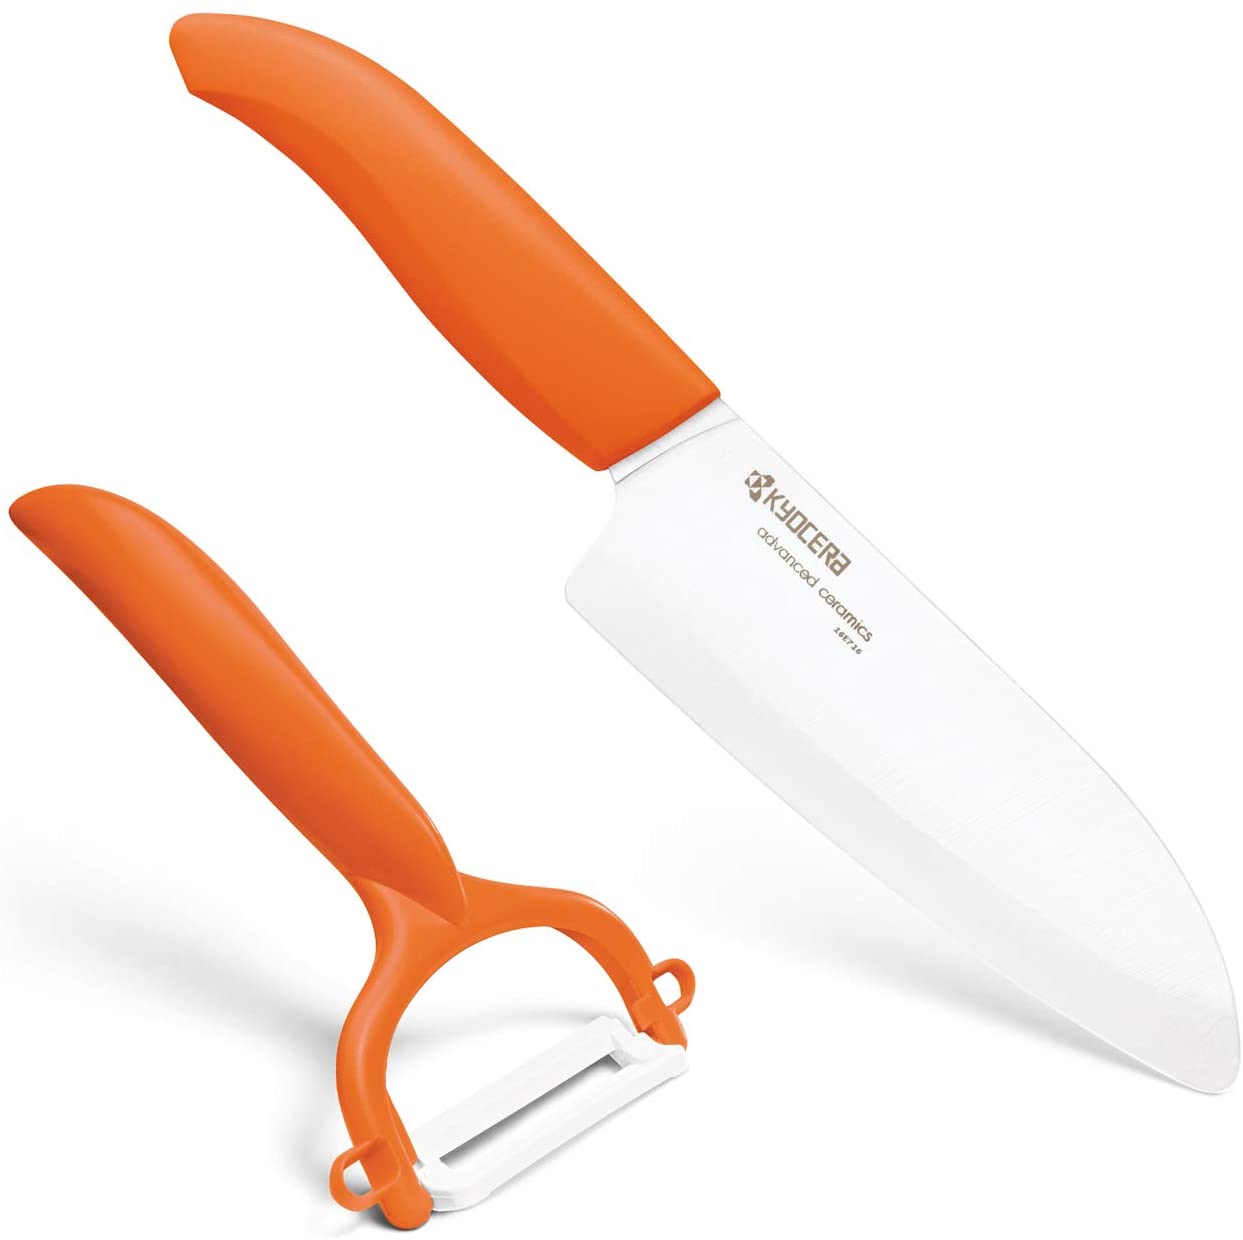 Kyocera Advanced Ceramic Revolution Series 5-1/2-inch Santoku Knife and Y-Peeler Set, Orange